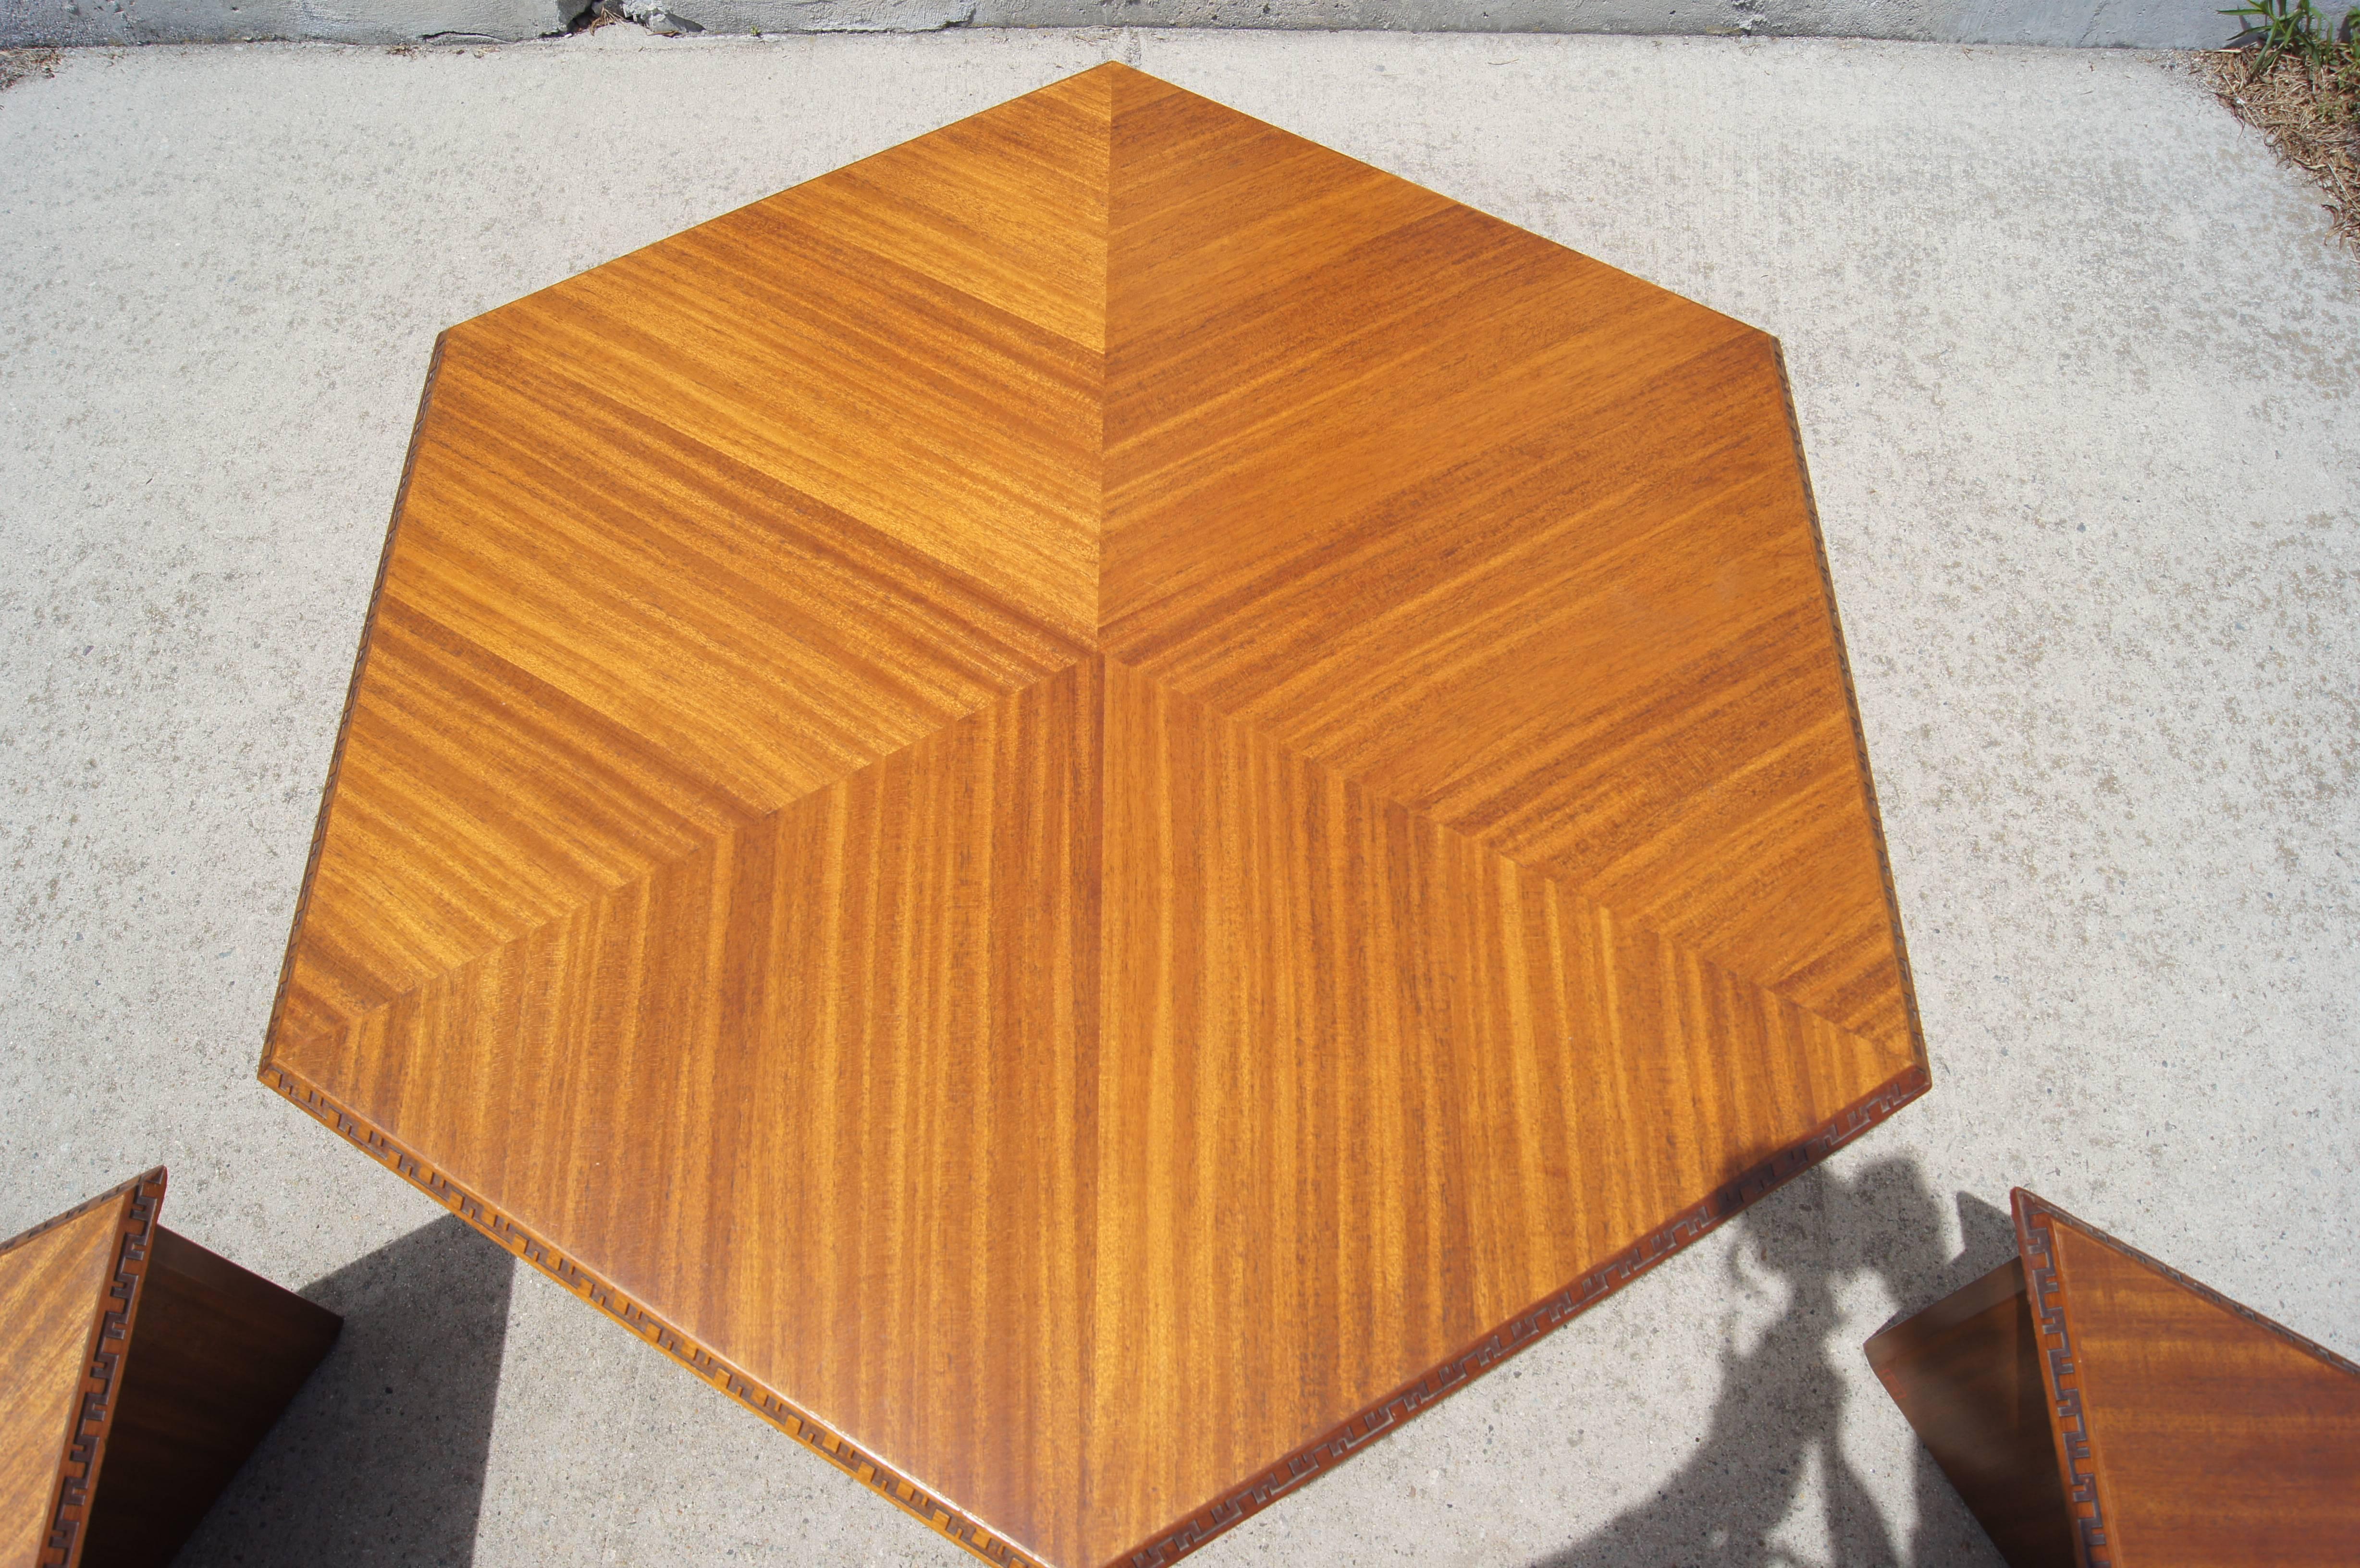 American Hexagonal Coffee Table Set by Frank Lloyd Wright for Heritage-Henredon